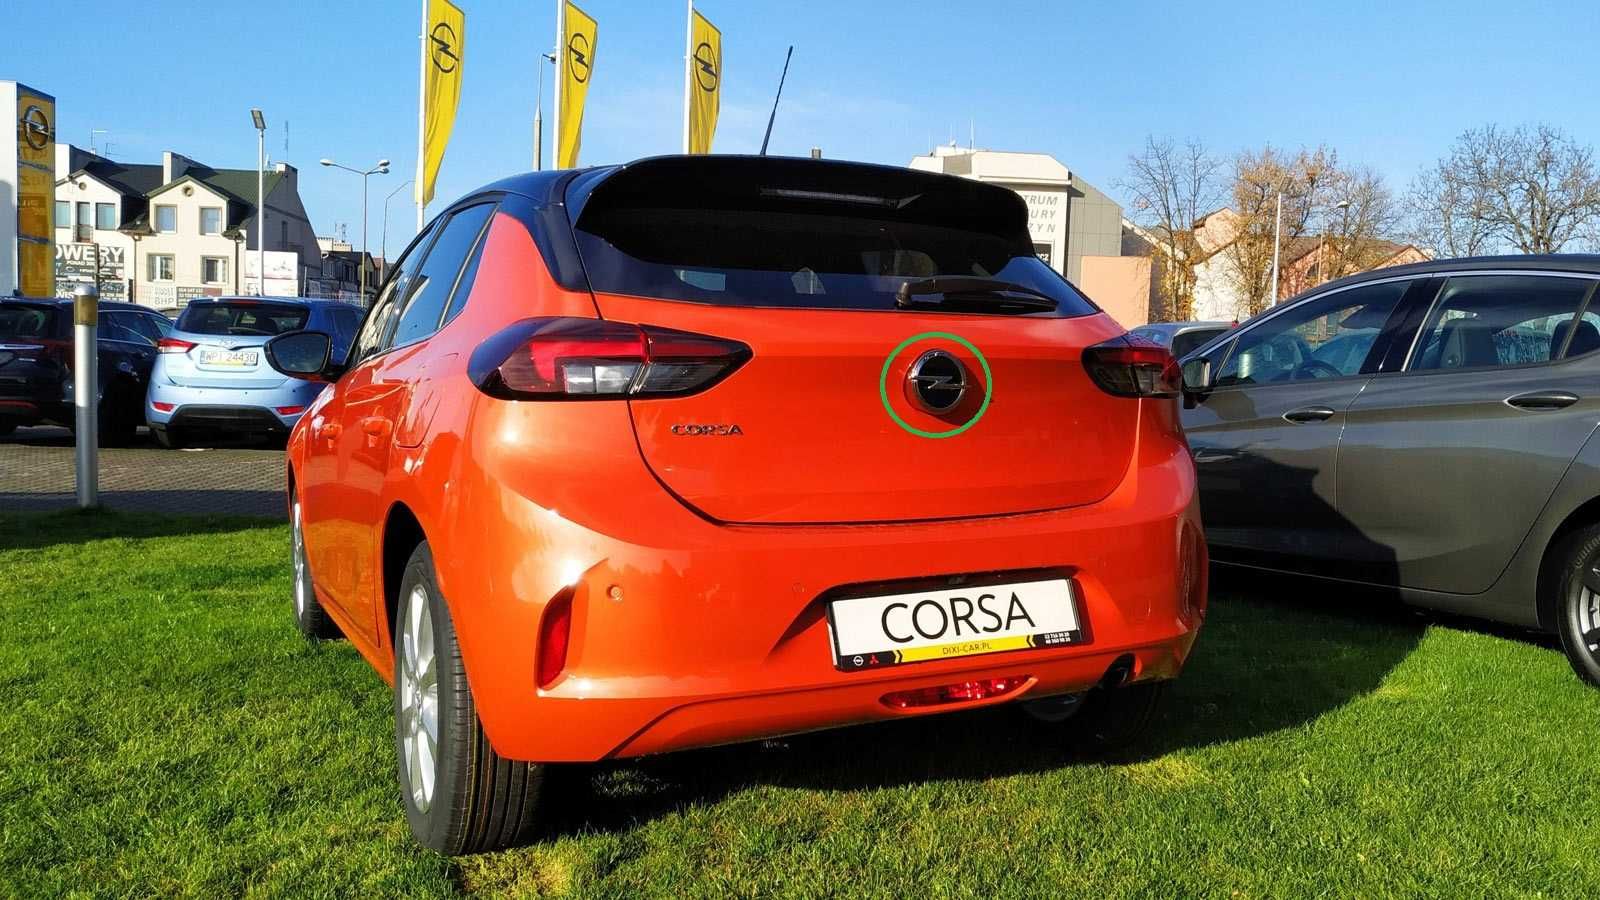 Znaczek Emblemat Mikro Styk Klamka Klapy Bagażnika Opel Corsa F Nowy